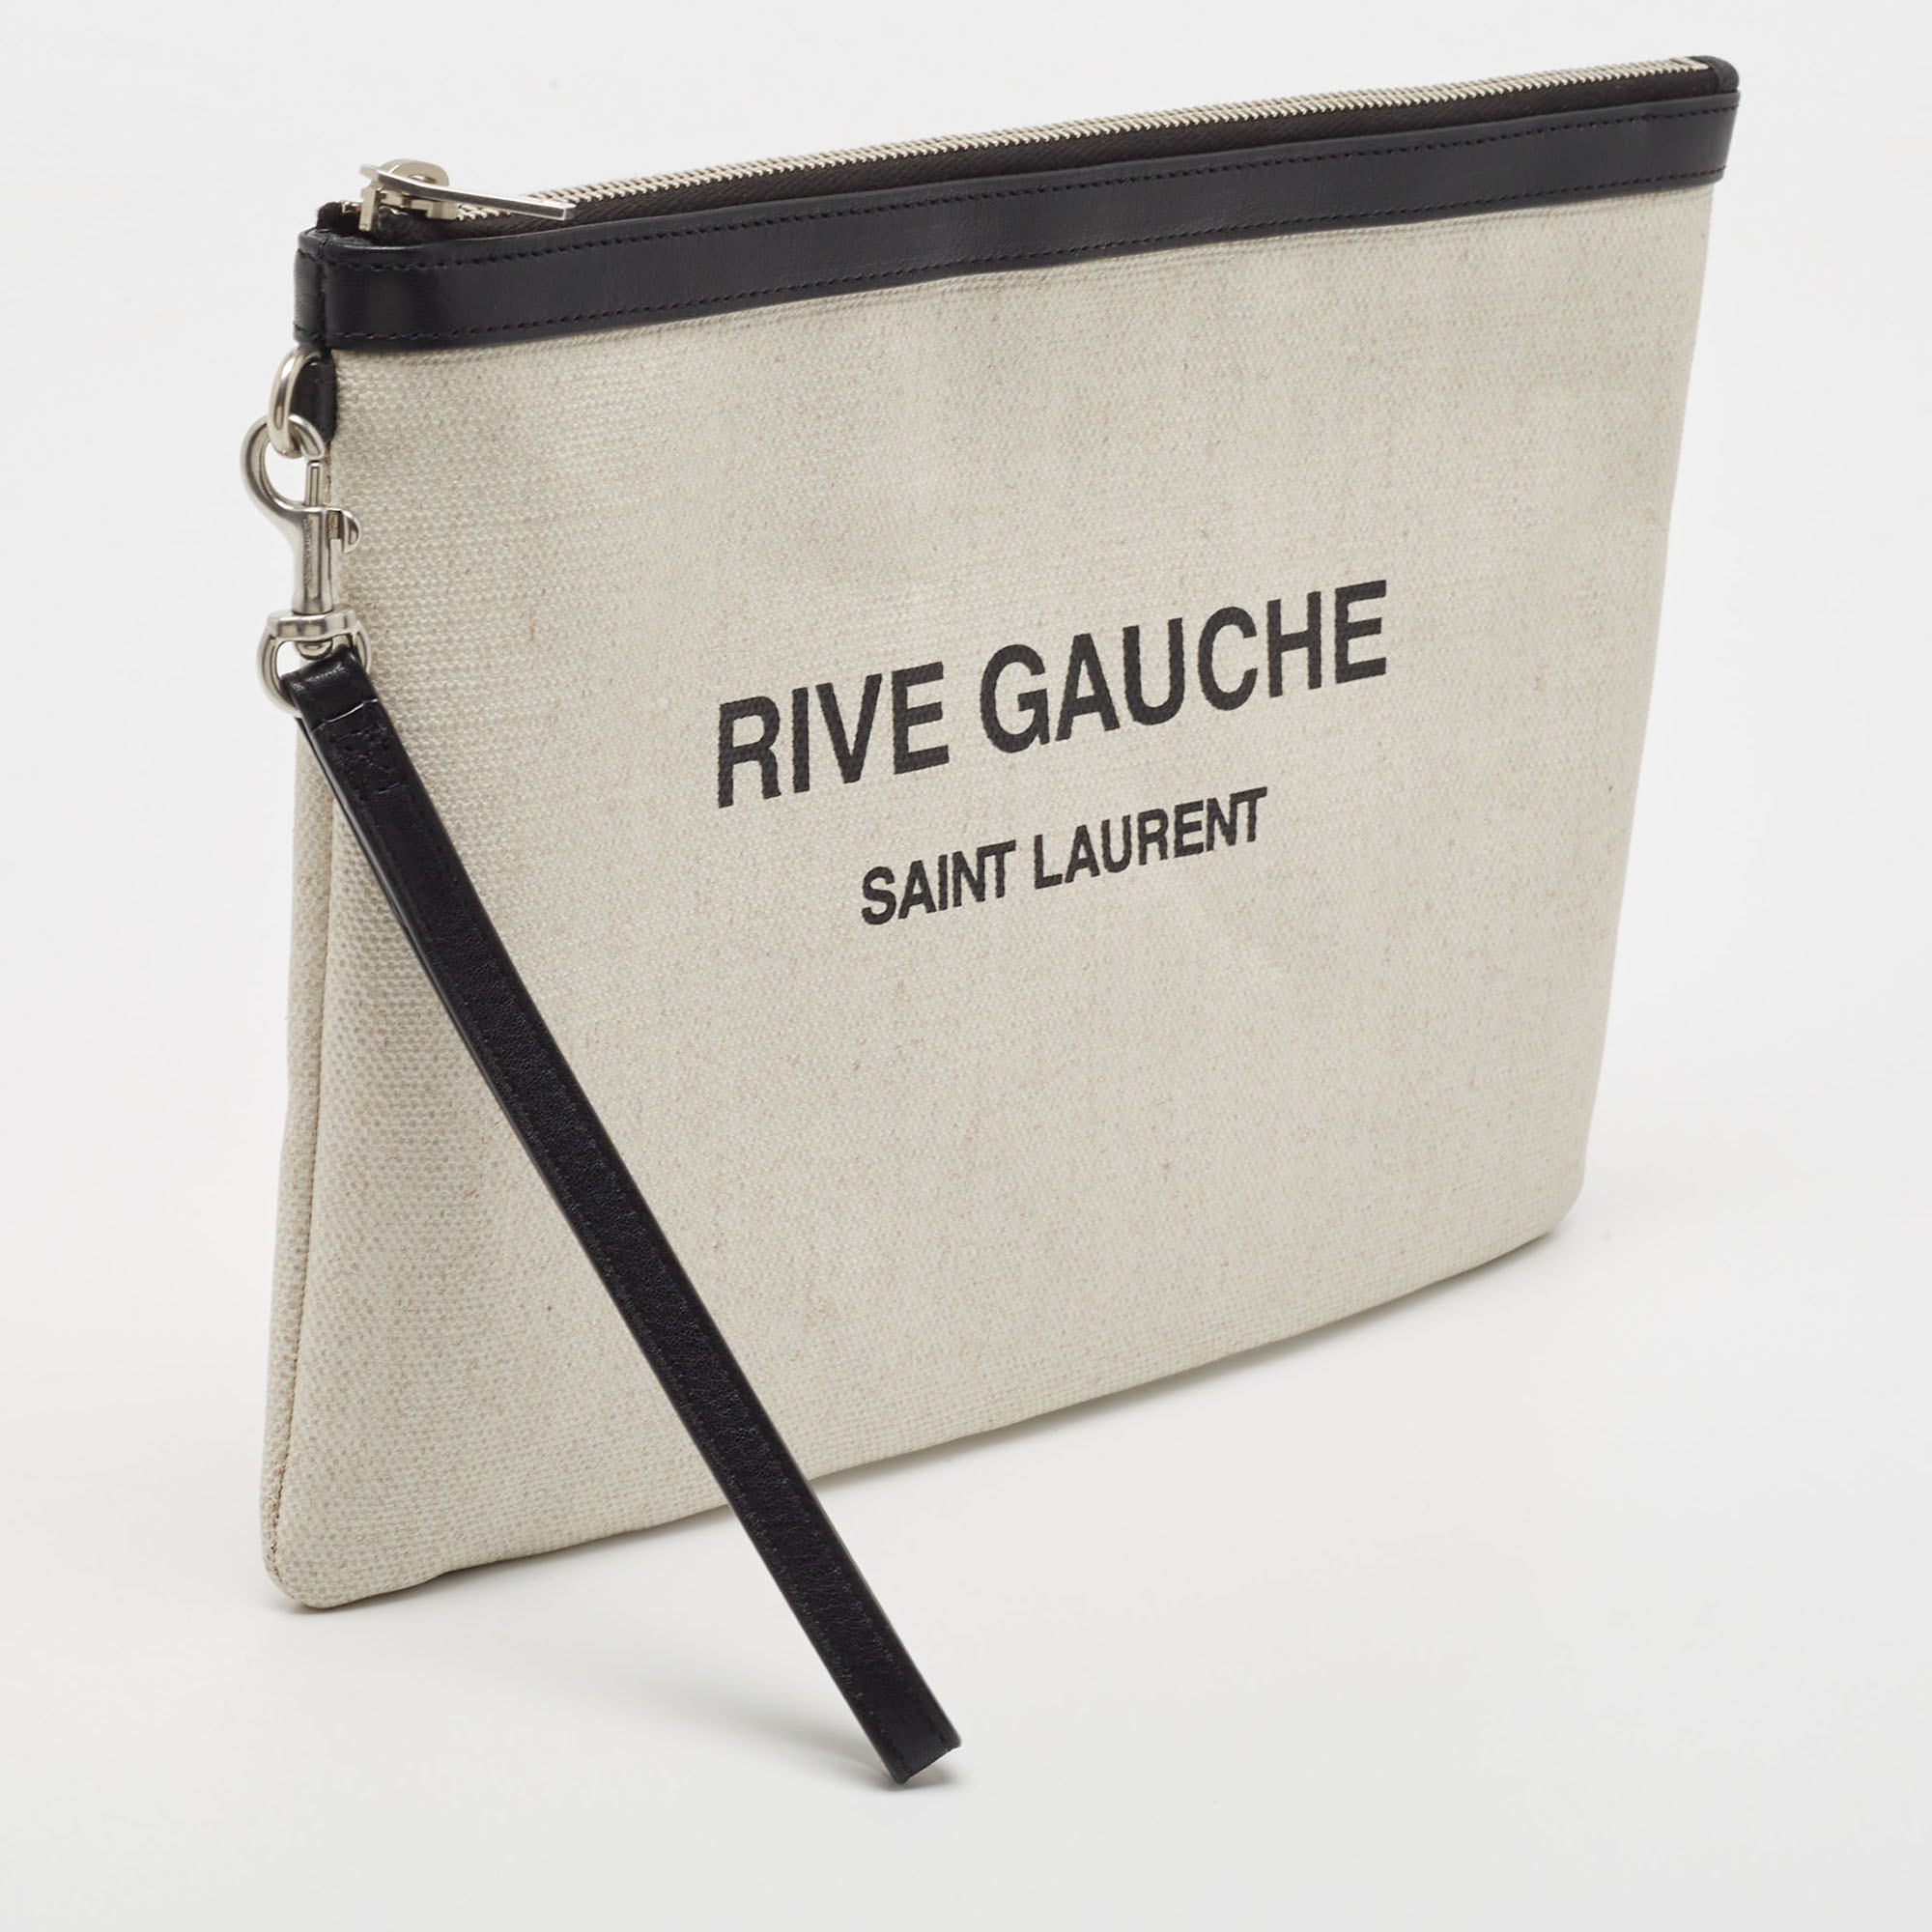 Saint Laurent Off White/Black Canvas And Leather Rive Gauche Zip Clutch